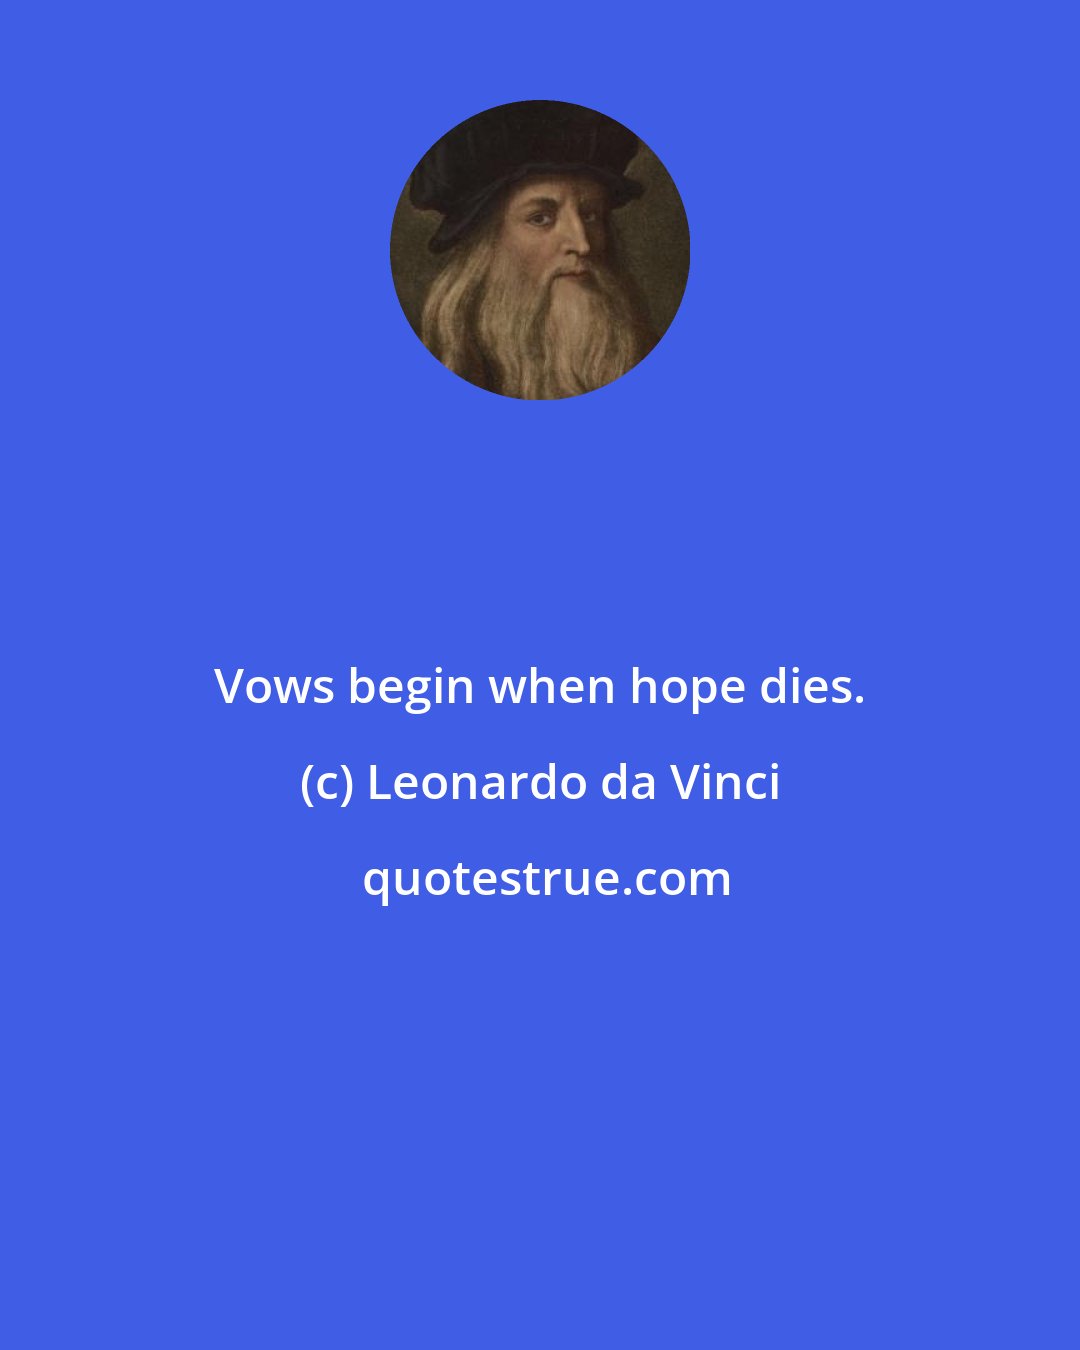 Leonardo da Vinci: Vows begin when hope dies.